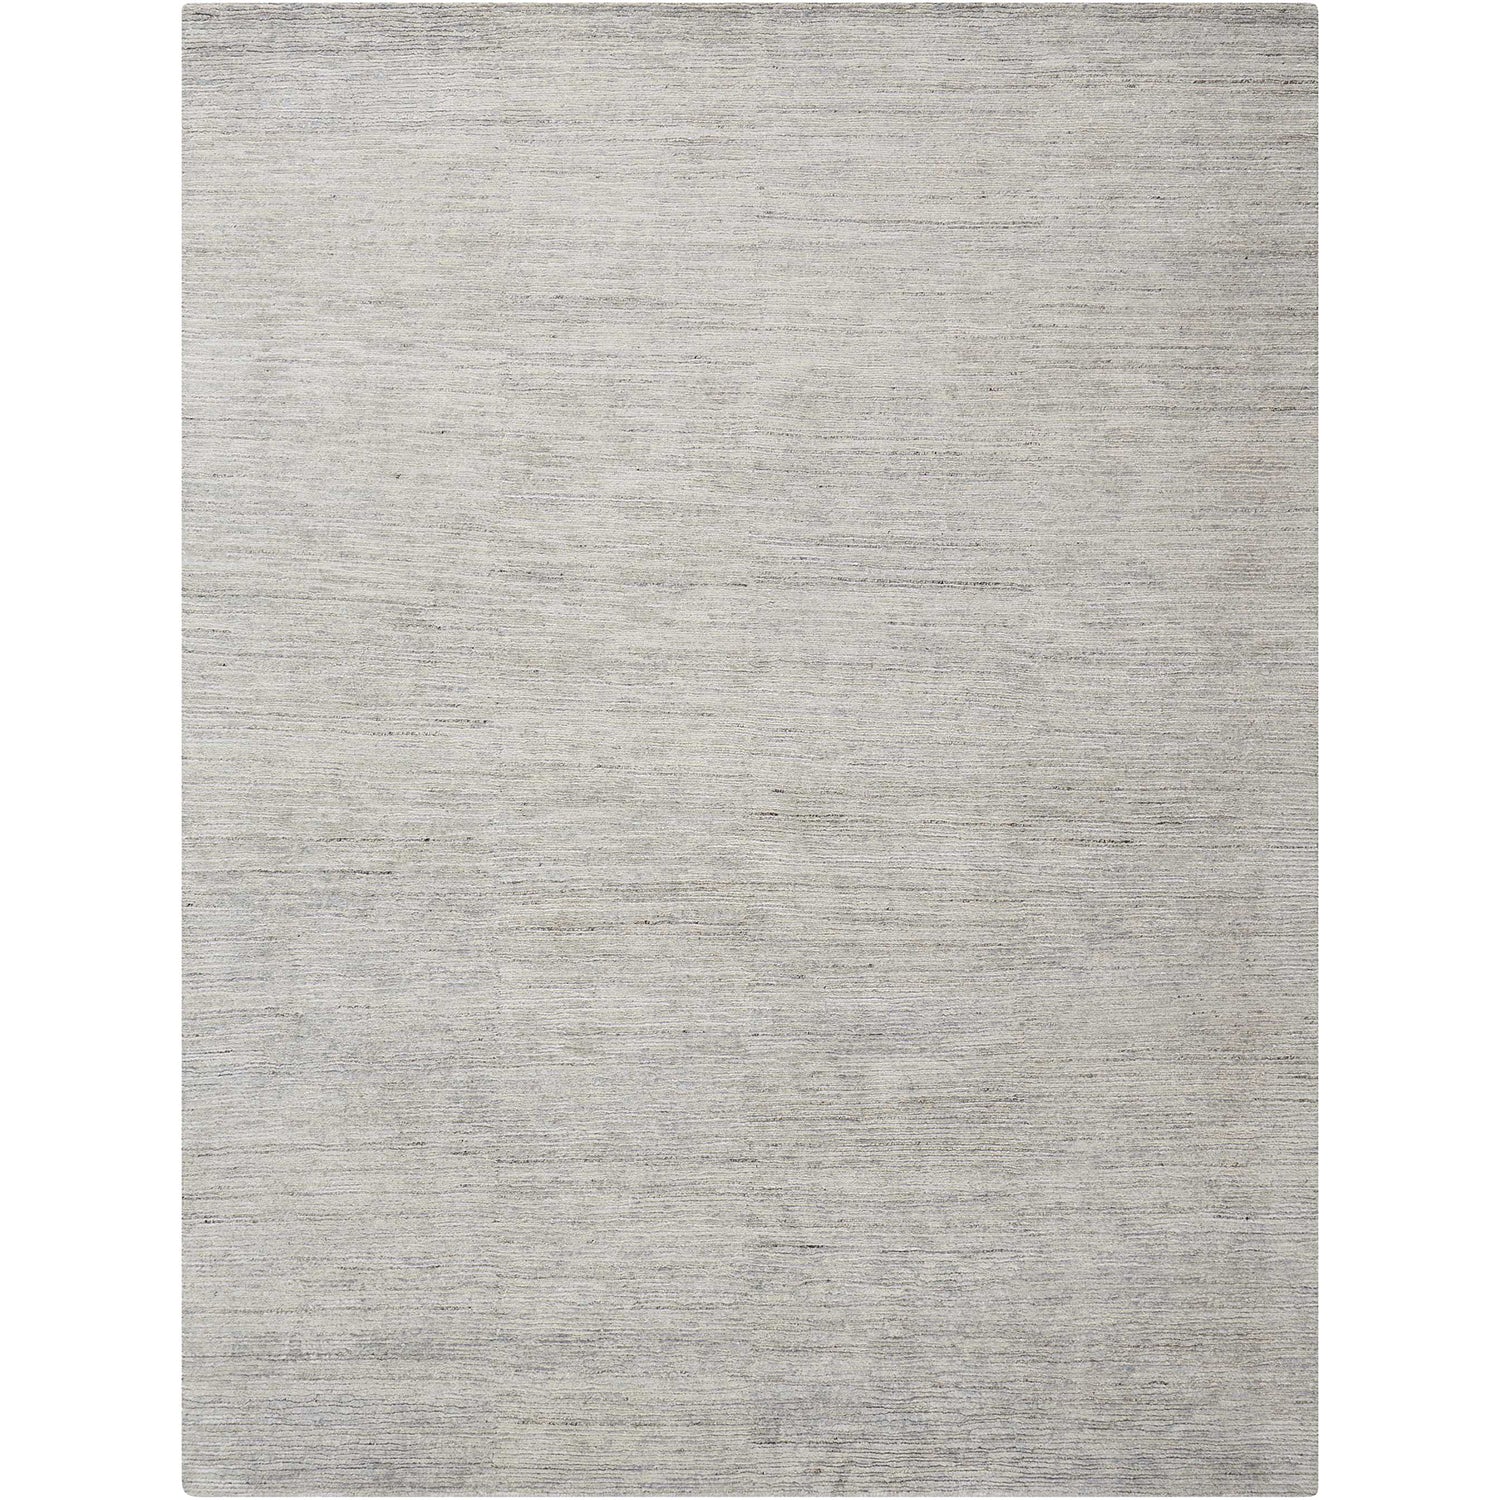 Minimalistic rectangular area rug in shades of light grey/silver.